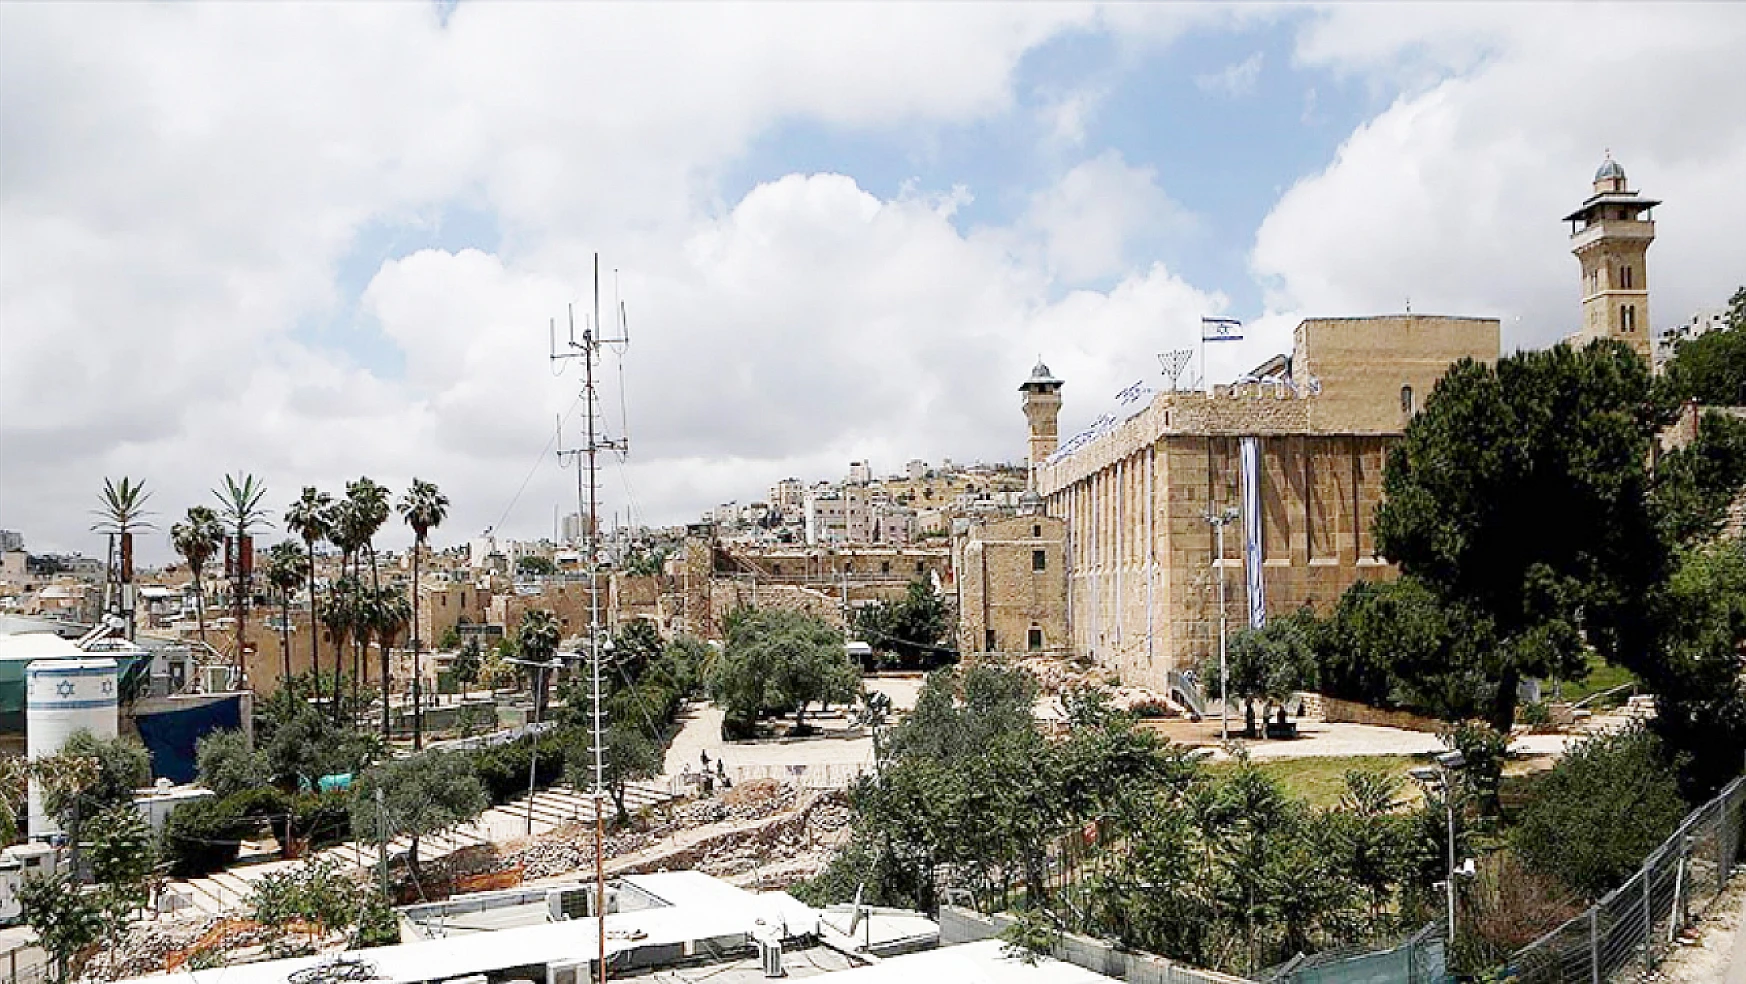 İsrail, El Halil'deki Harem-i İbrahim Camisi'ni Müslümanlara kapattı